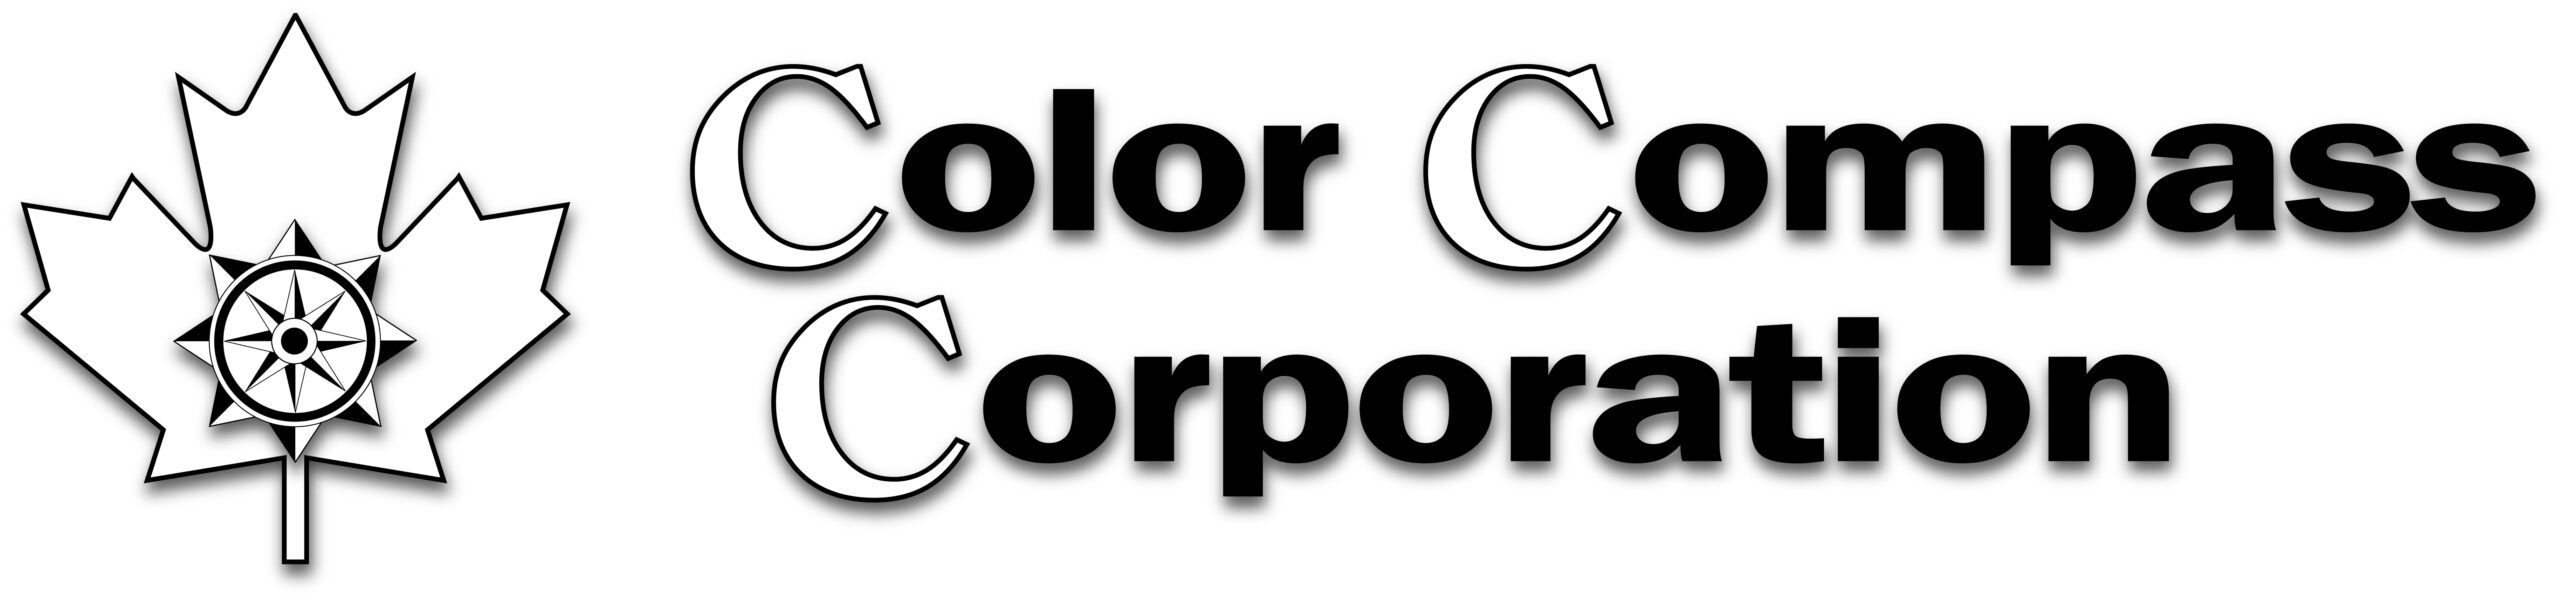 Color Compass Corporation